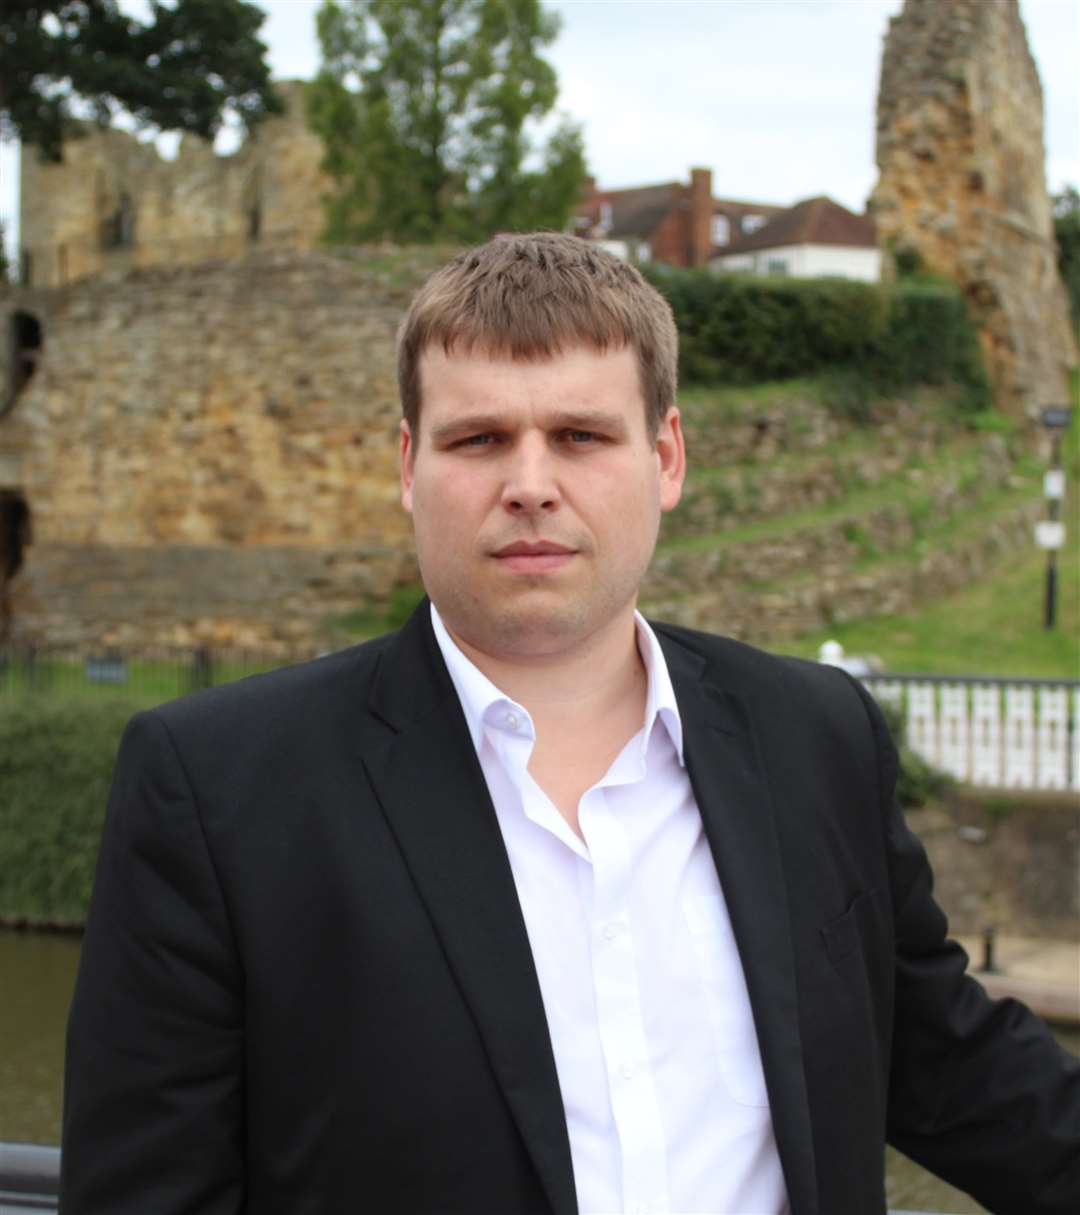 Leader of the council, Conservative Matt Boughton